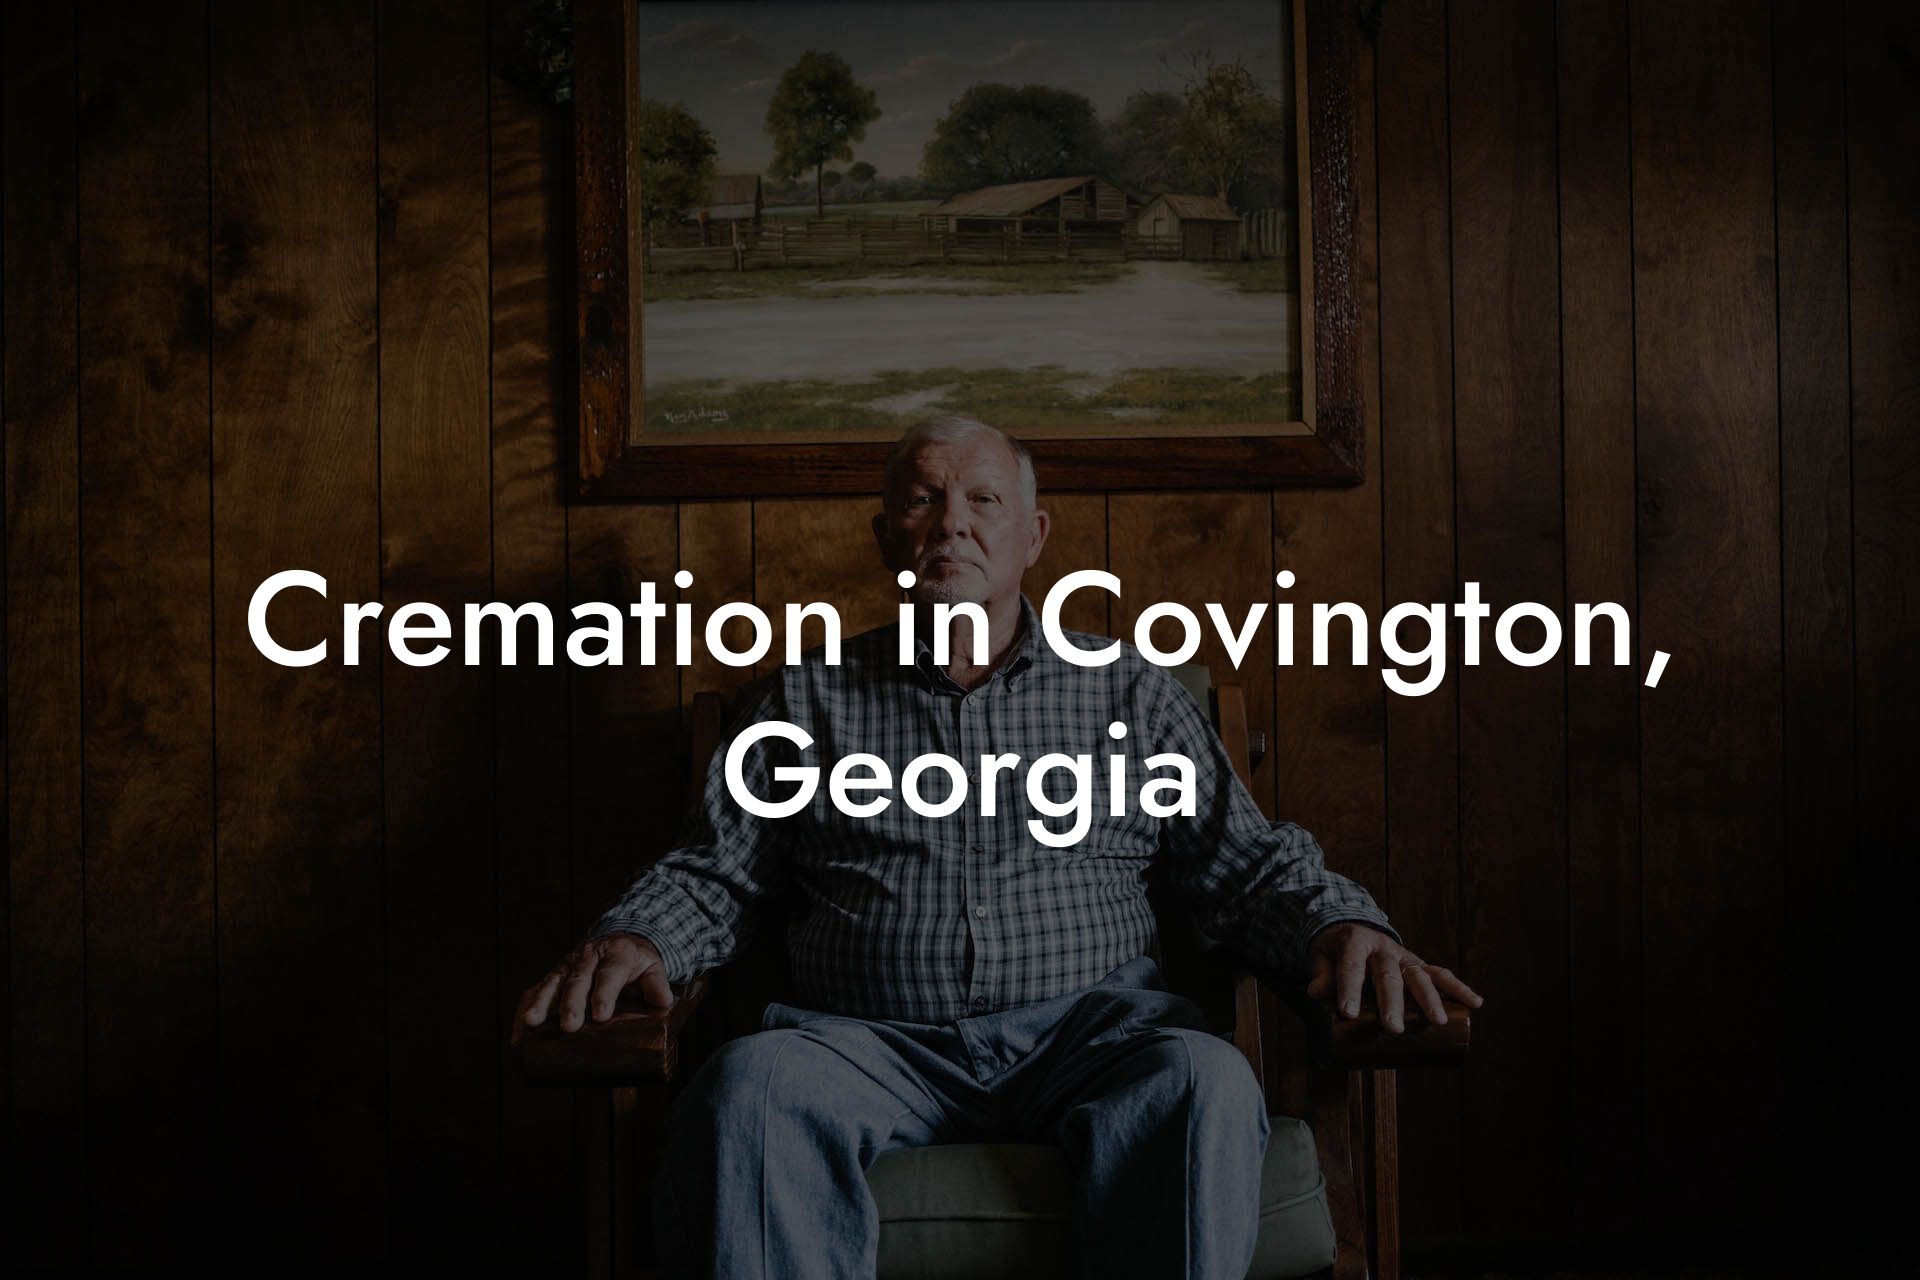 Cremation in Covington, Georgia